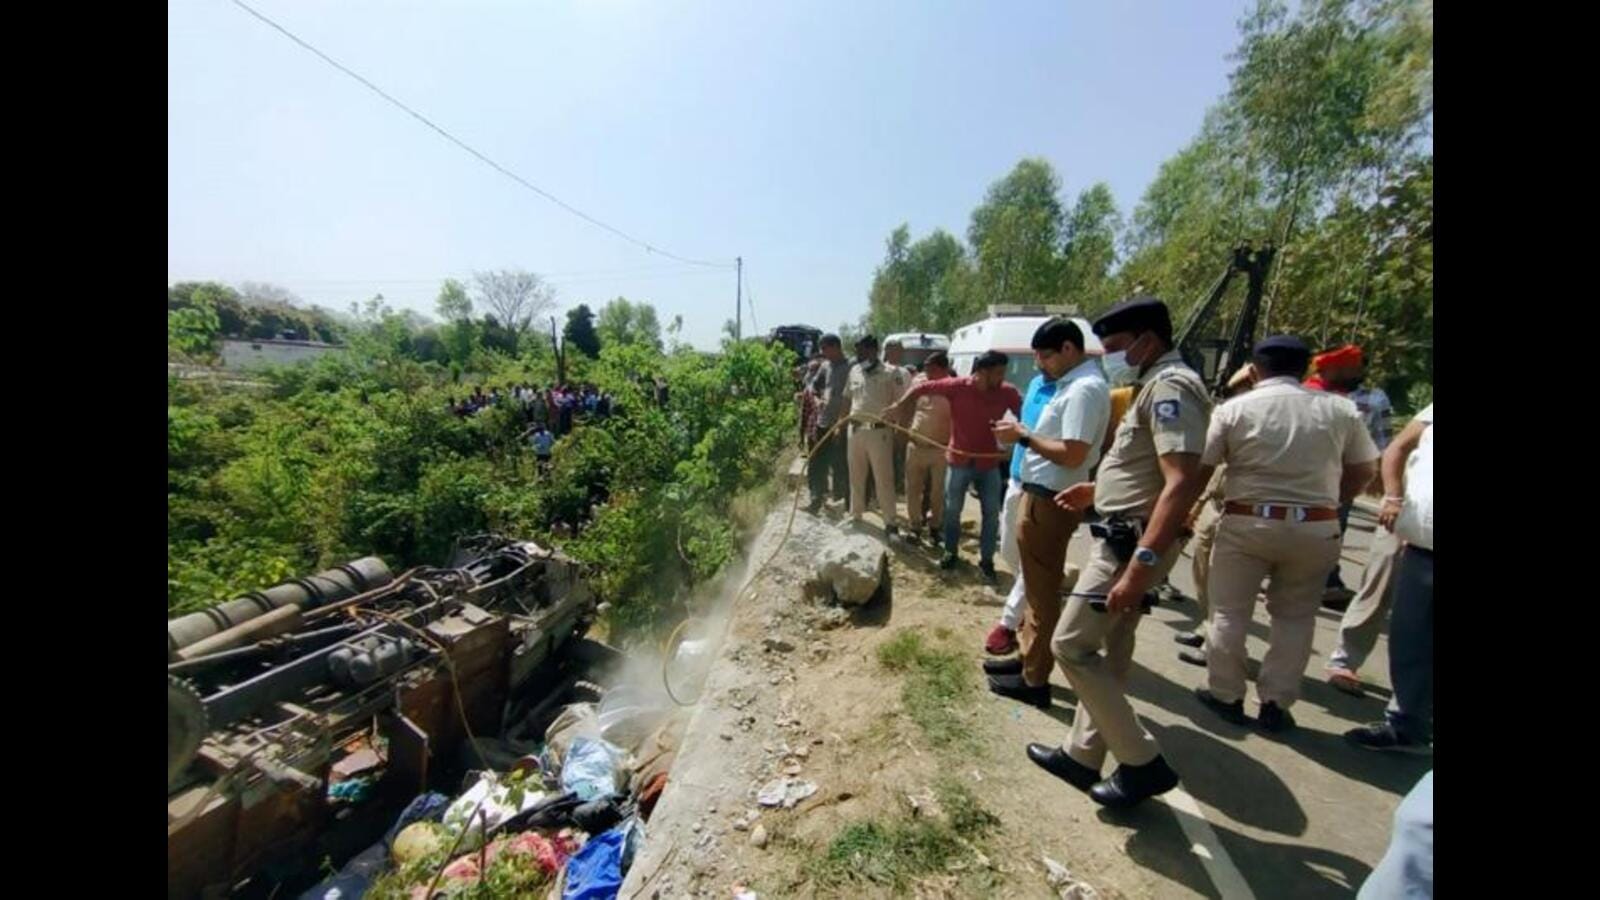 Una accident: 35 injured pilgrims brought to Tarn Taran - Hindustan Times